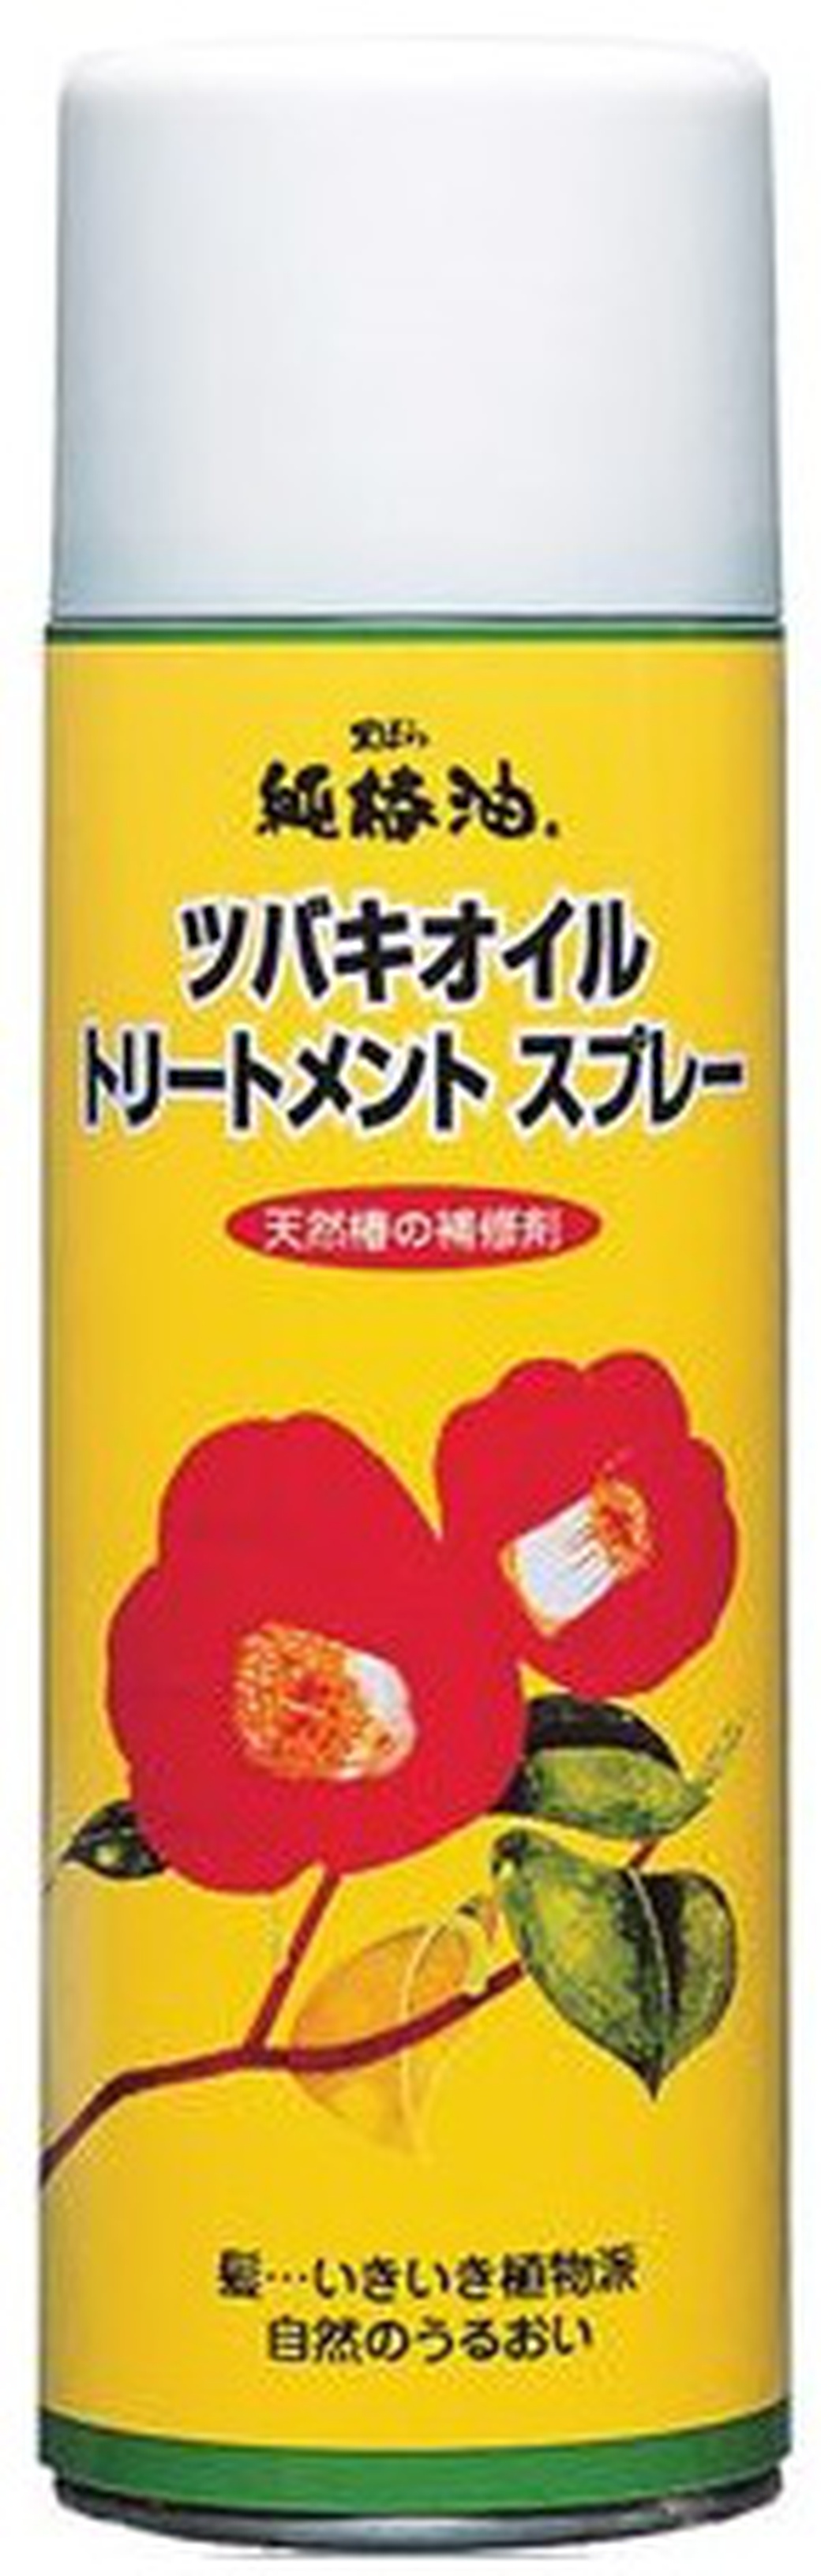 Kurobara "Tsubaki Oil" Восстанавливающее средство-спрей для ухода за волосами, с маслом камелии, 100 мл фото